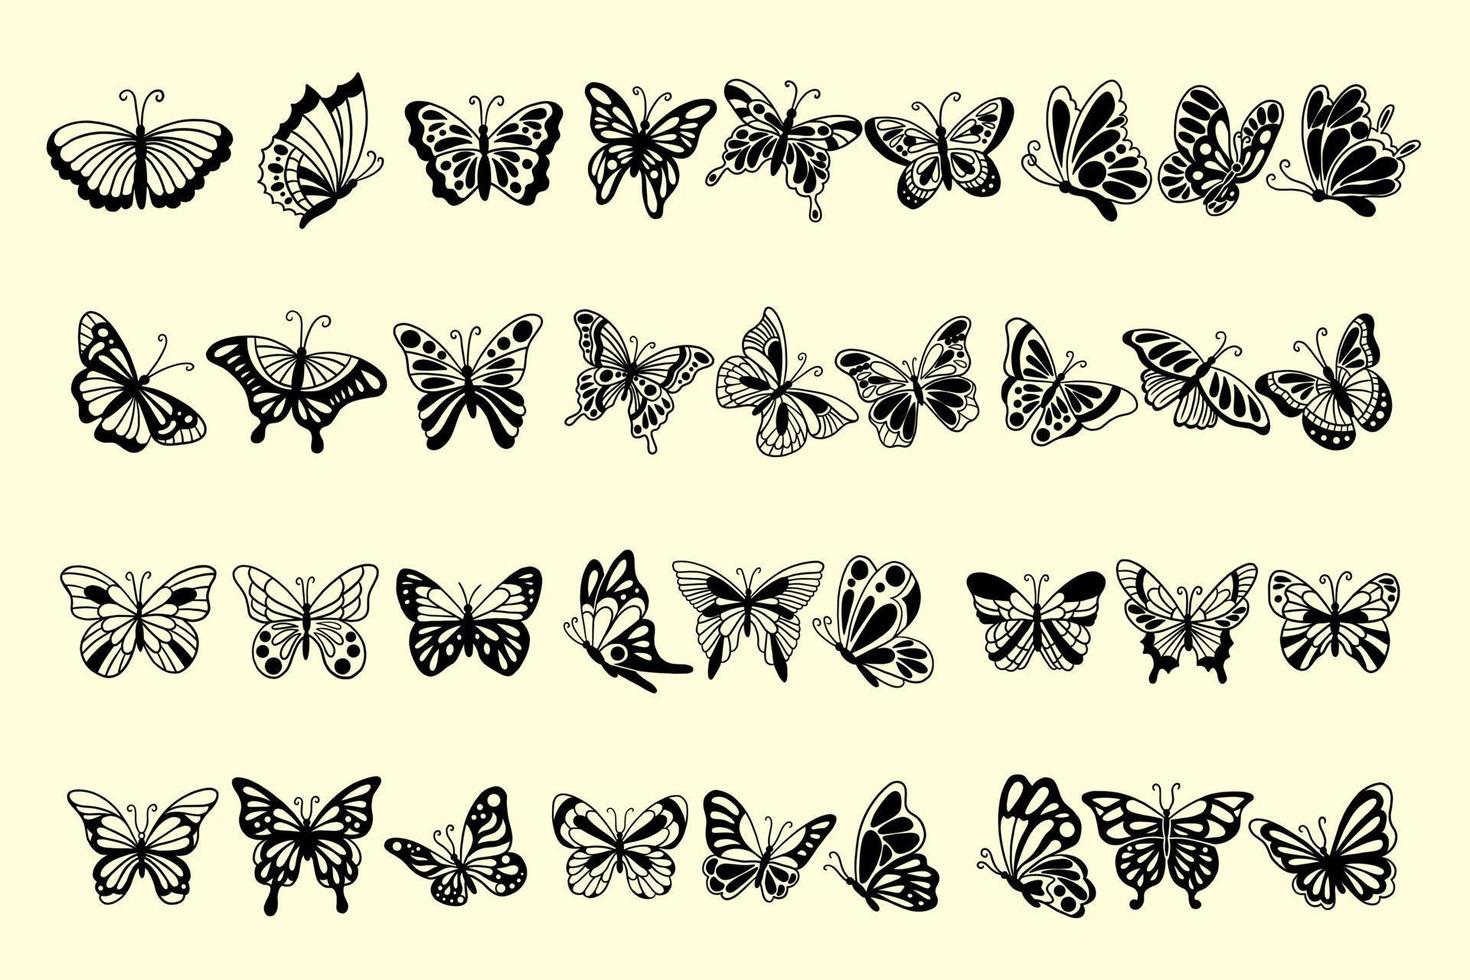 conjunto mega colección paquete bonita mariposa mariposas animal dibujado a mano silueta doodle clipart ilustración vector